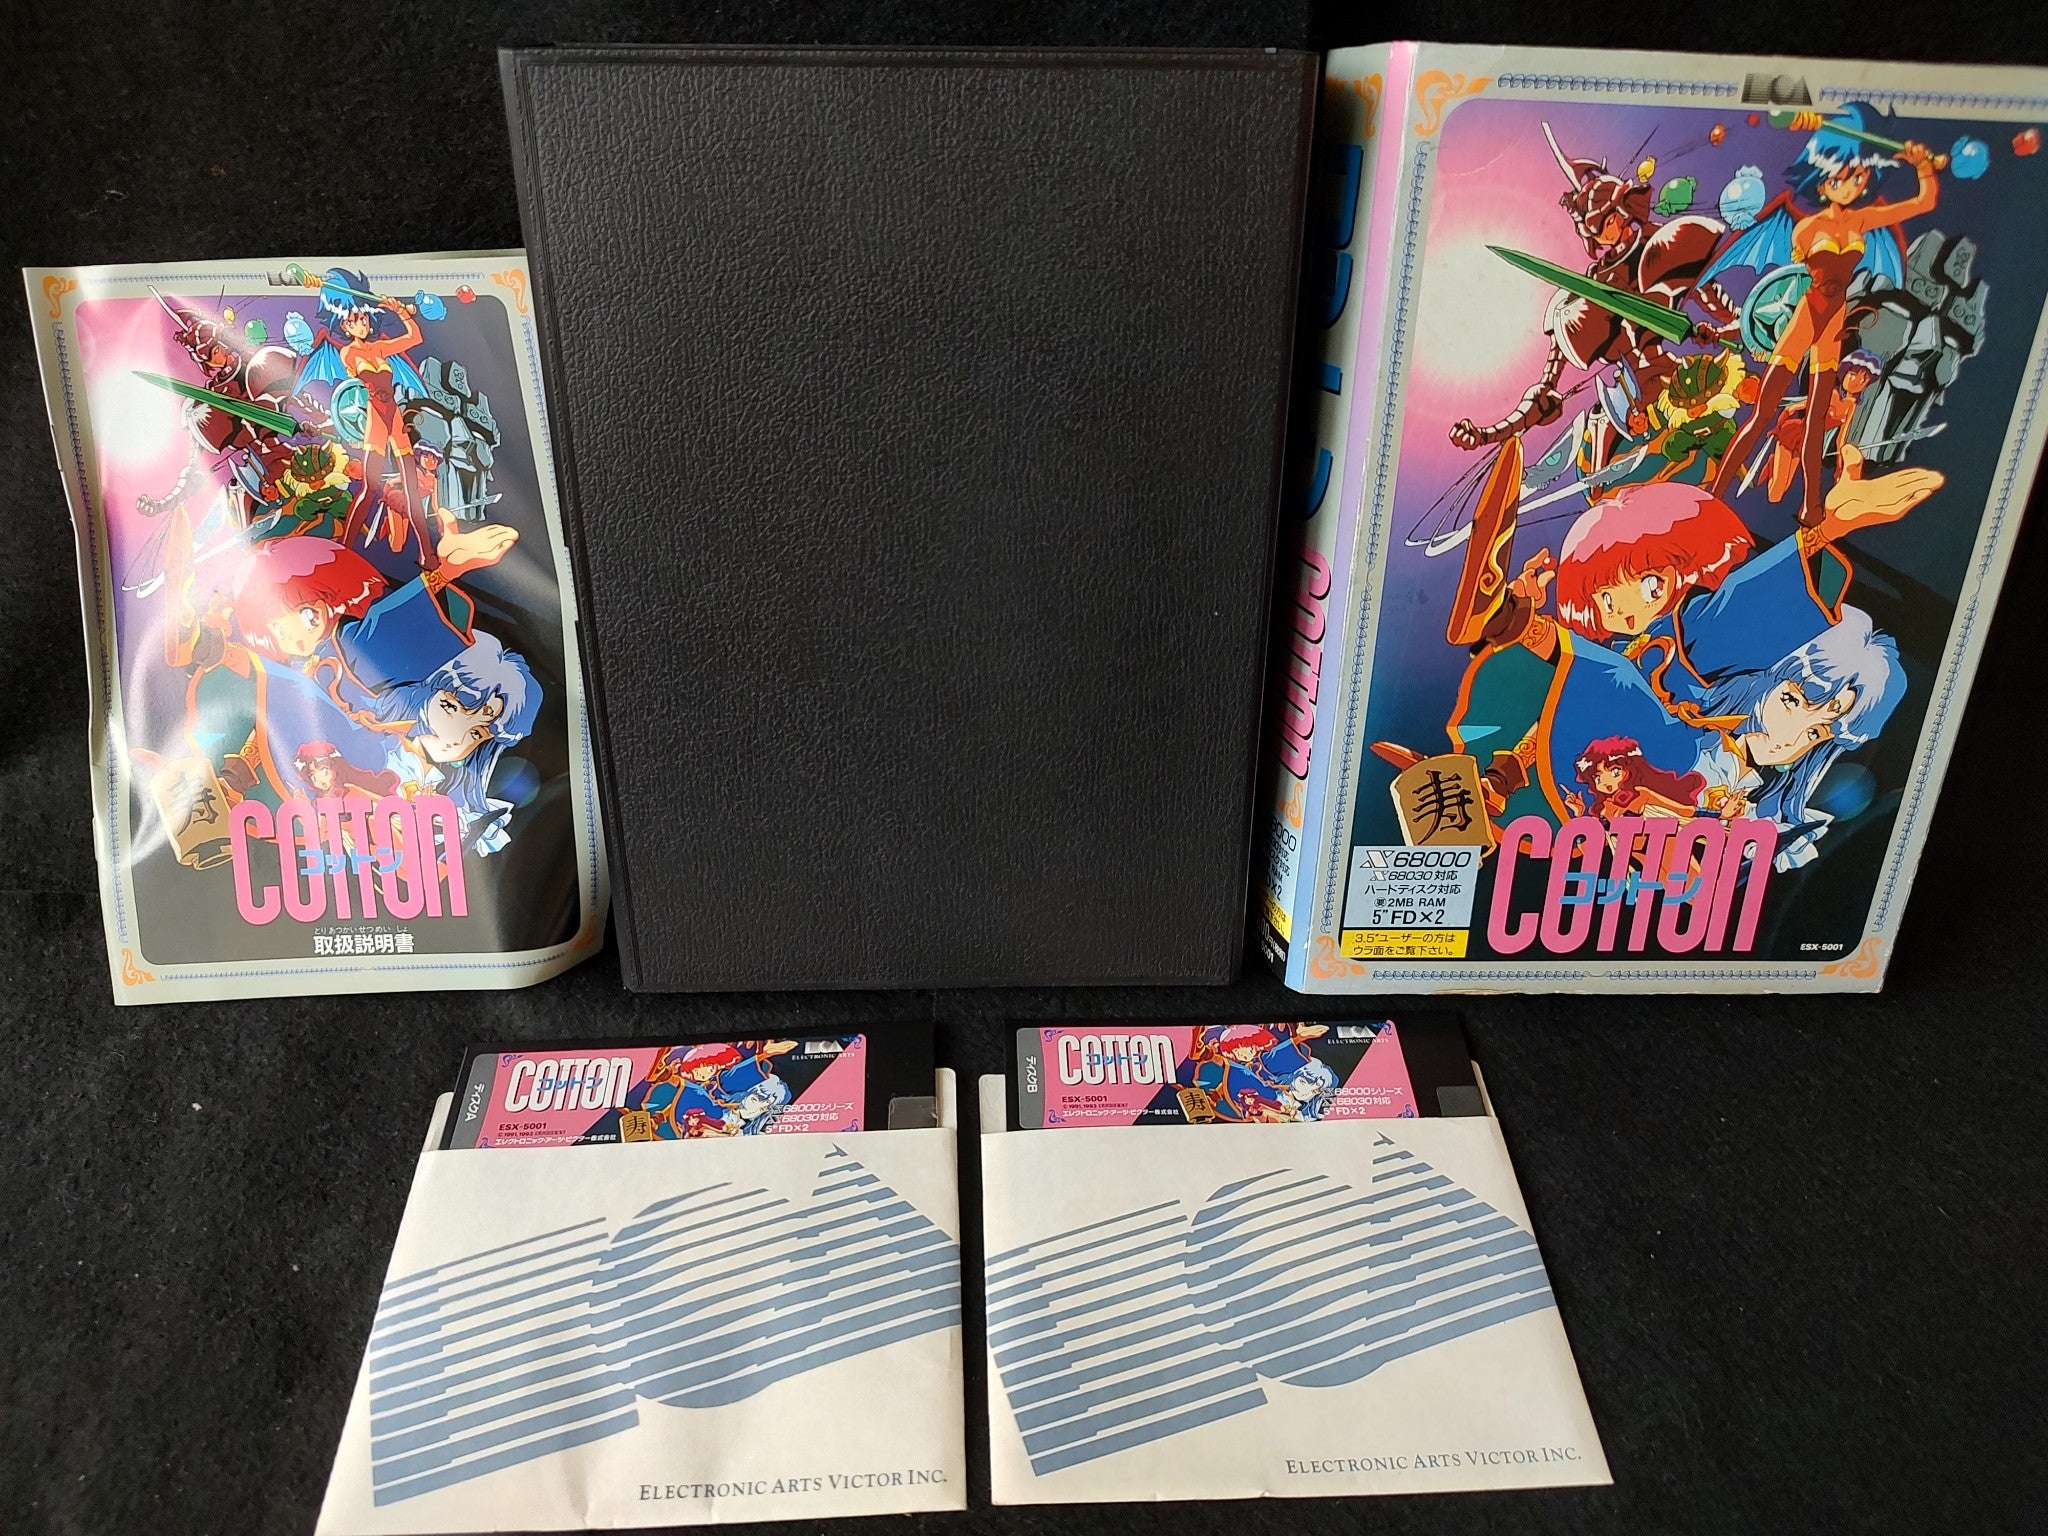 COTTON SHARP X68000 Game Floppy Disks, Manual, Box set 